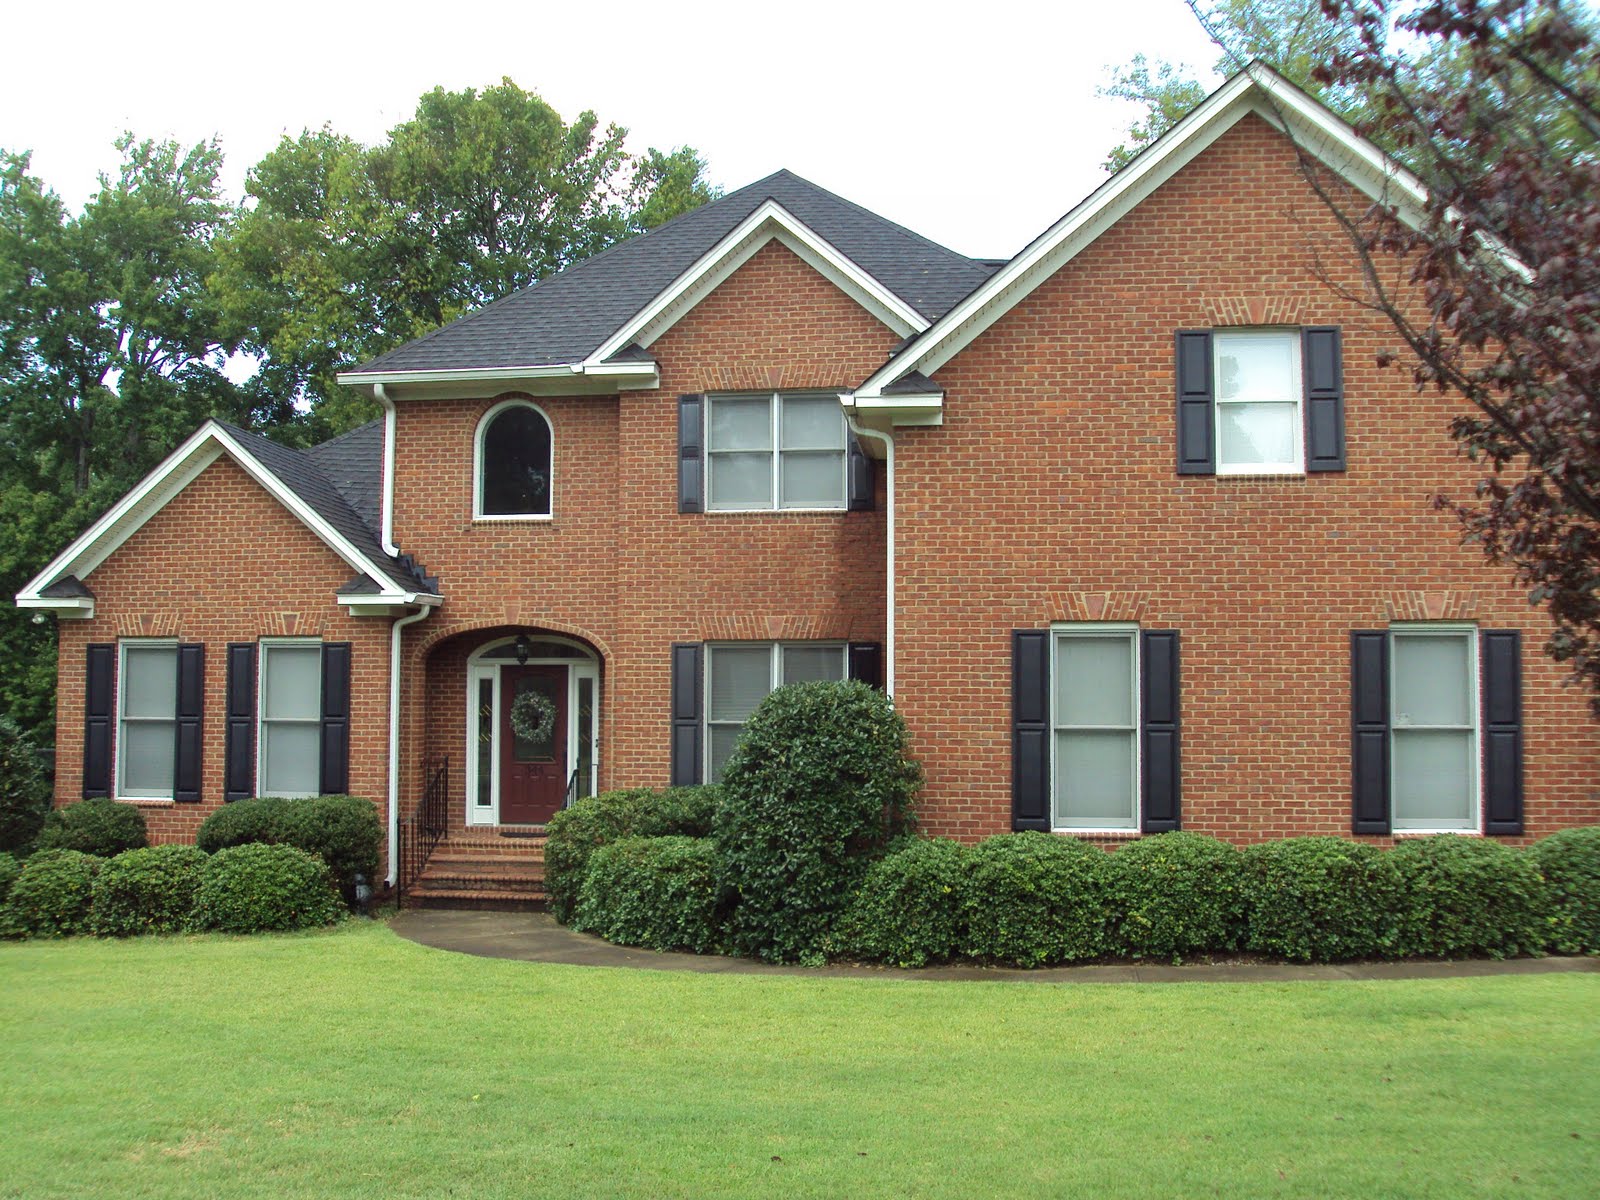 Download this Lexington Woodcreek Homes For Sale Carola Lane picture